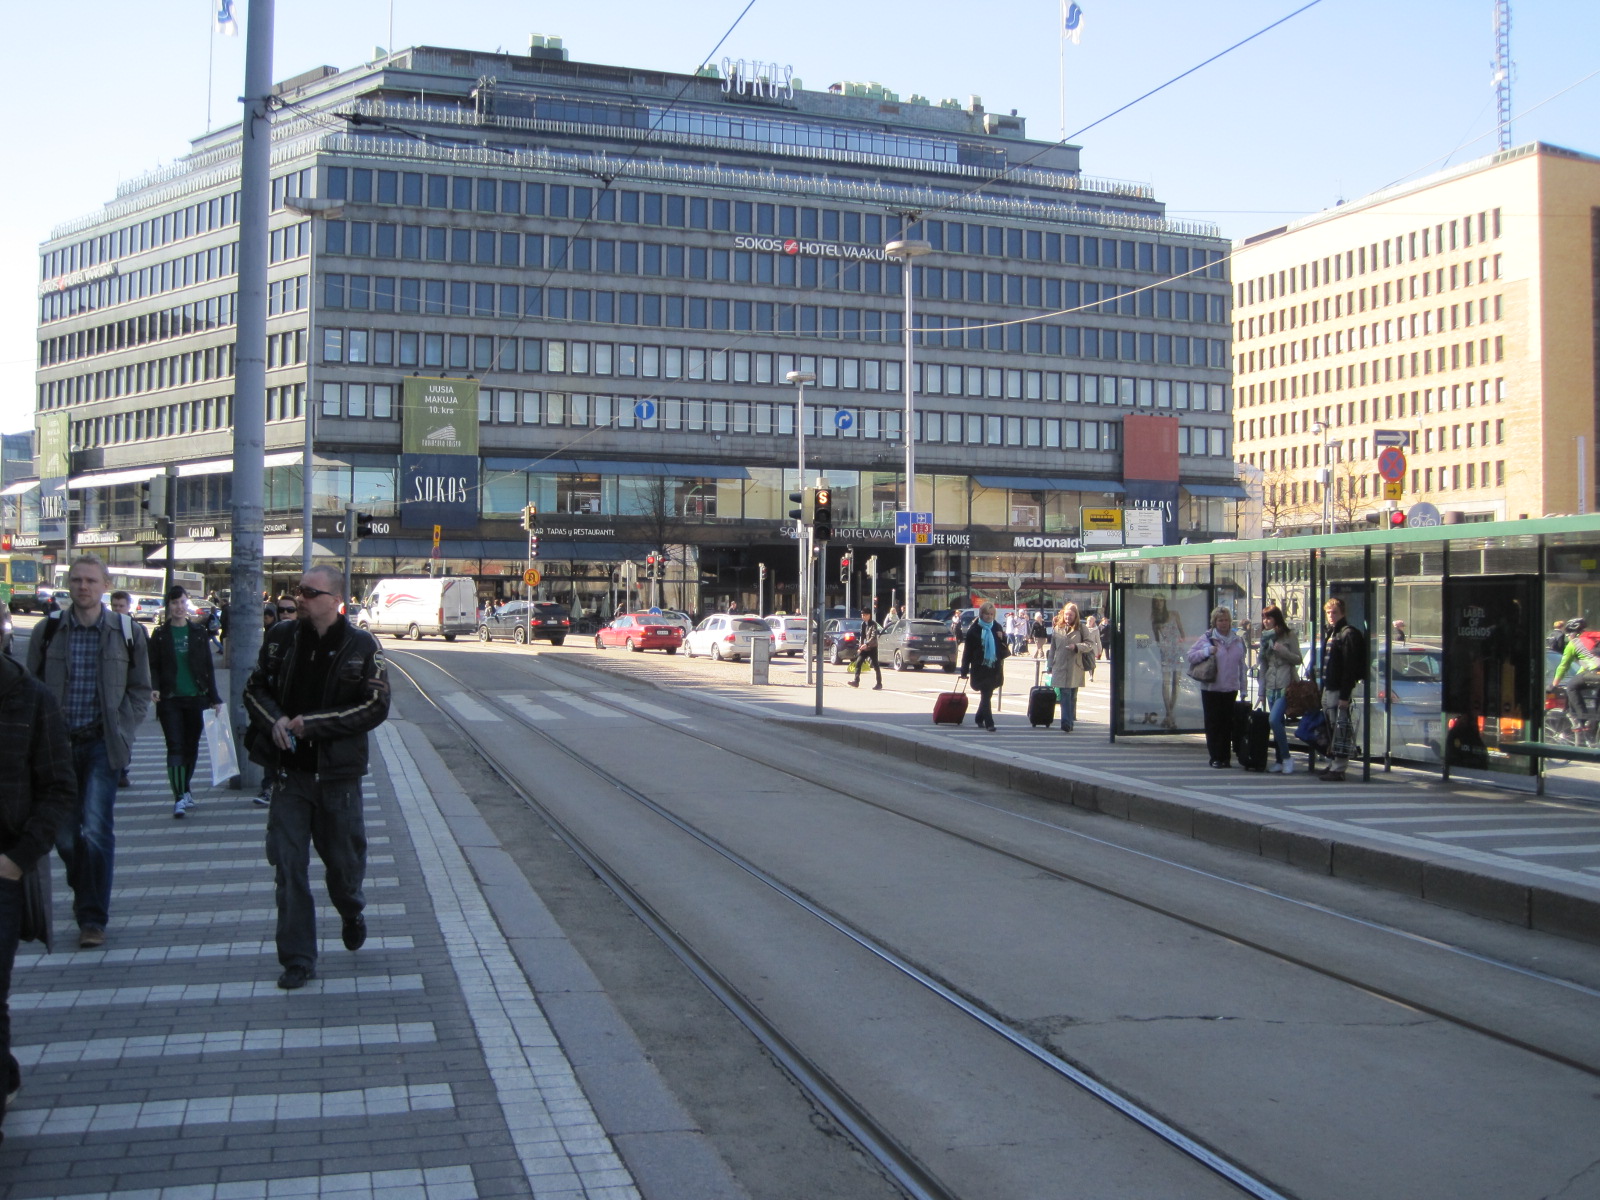 people walk through an empty street near a busy train track